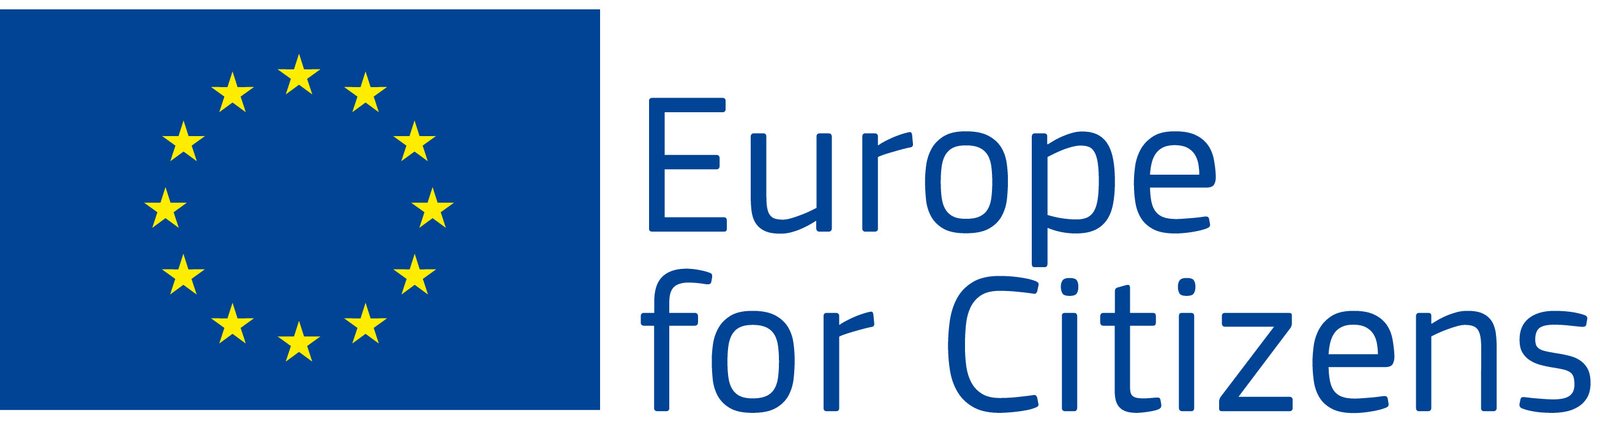 http://civic-forum.eu/wp-content/uploads/2015/03/Europe-for-citizens-logo2.jpg